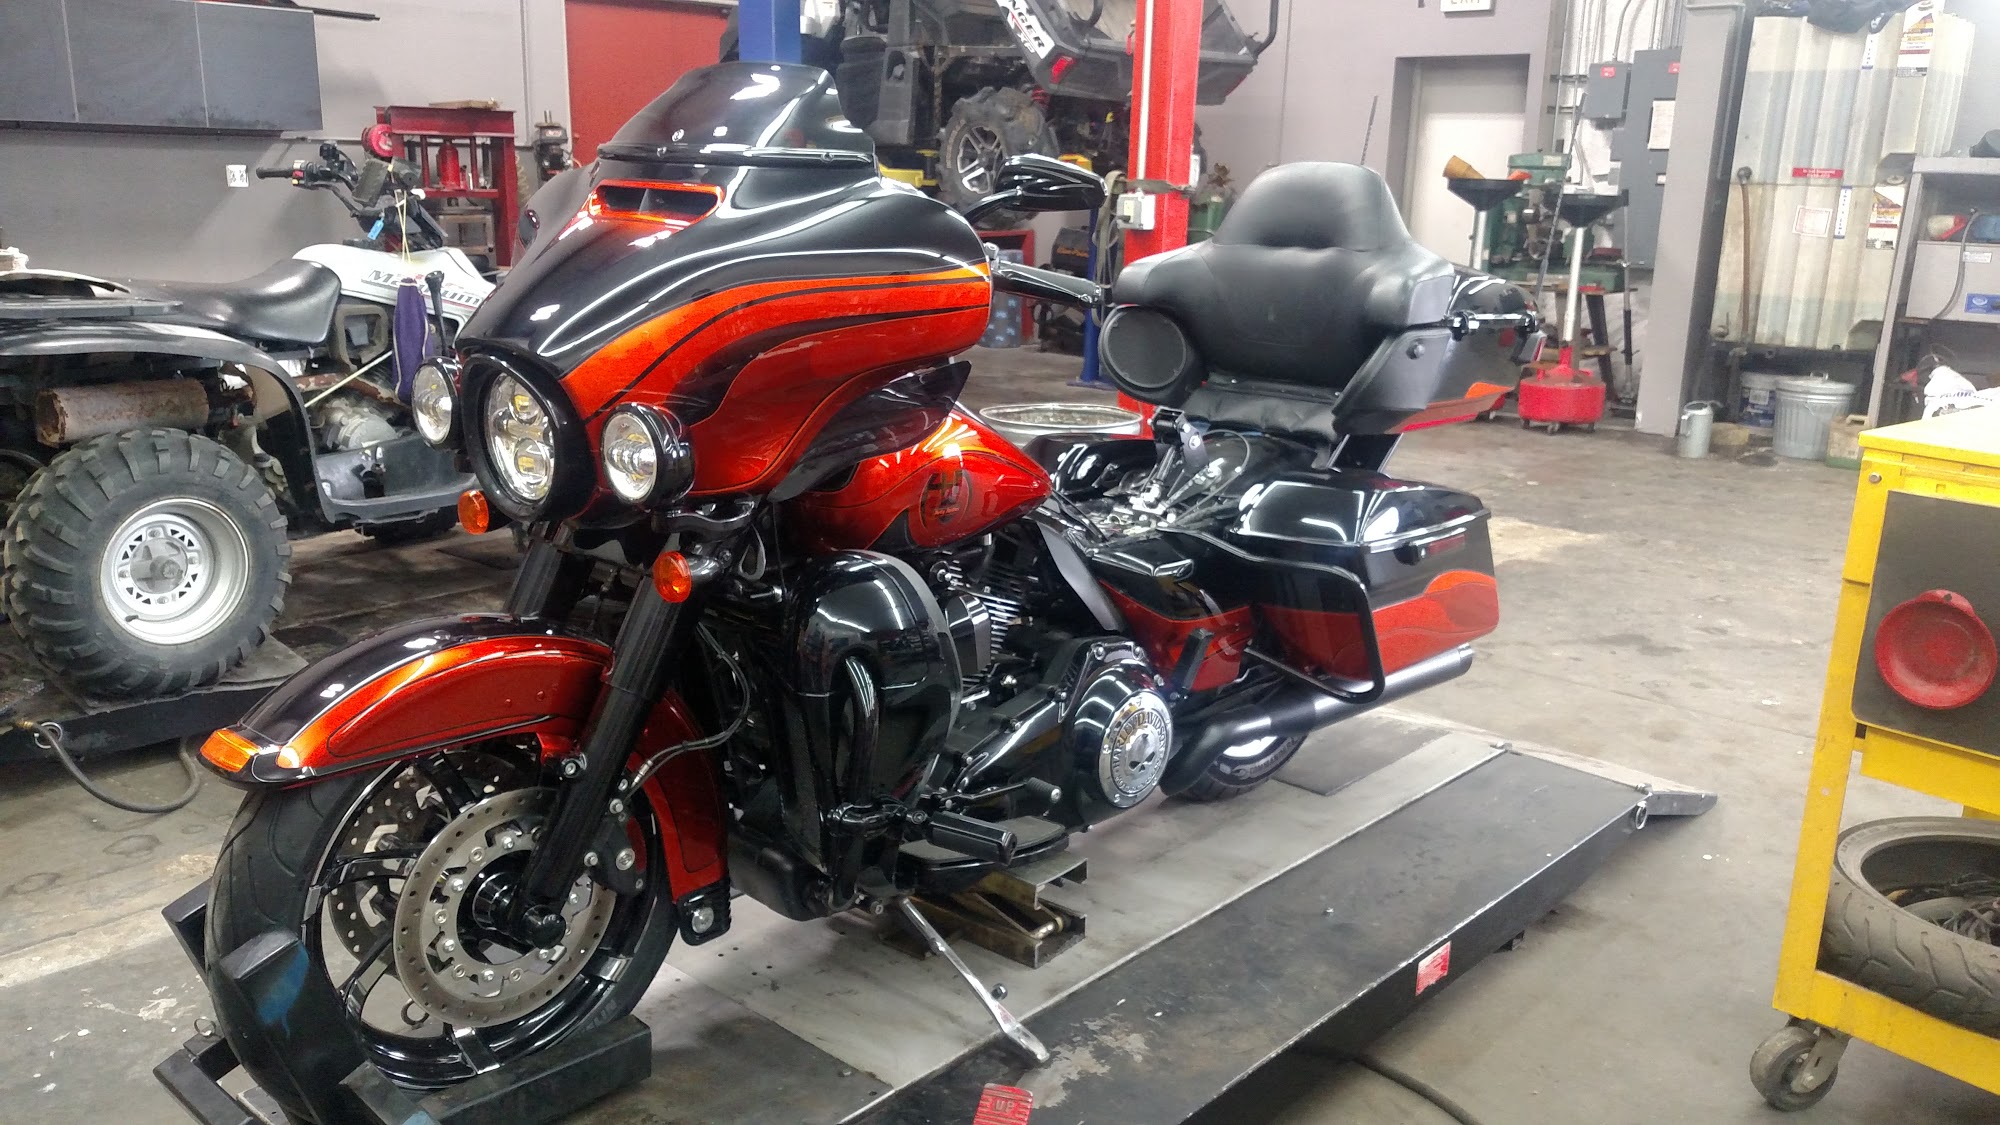 Mikes Motorcycle & ATV Repair